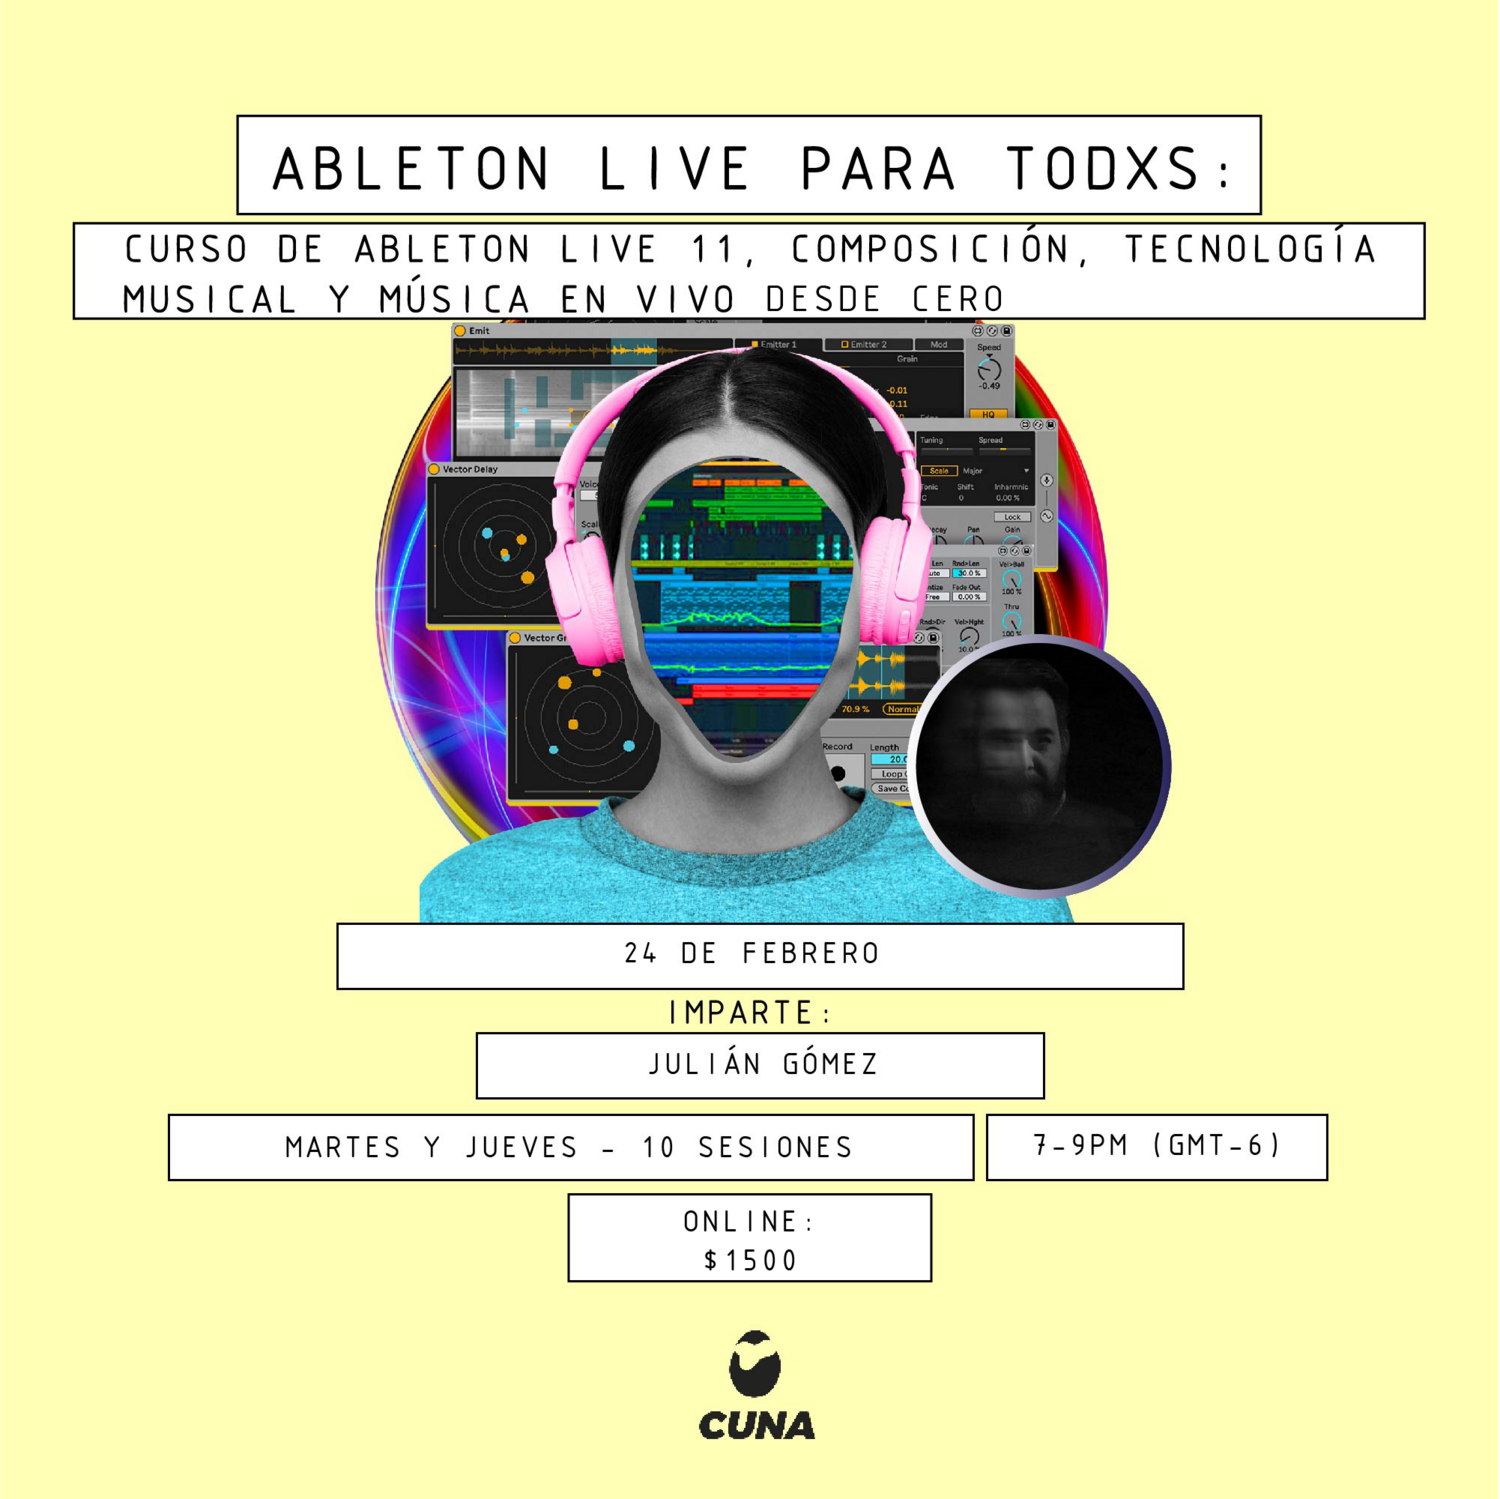 Ableton Live para todxs : Curso de Ableton Live 11, composición, tecnología musical y música en vivo desde cero